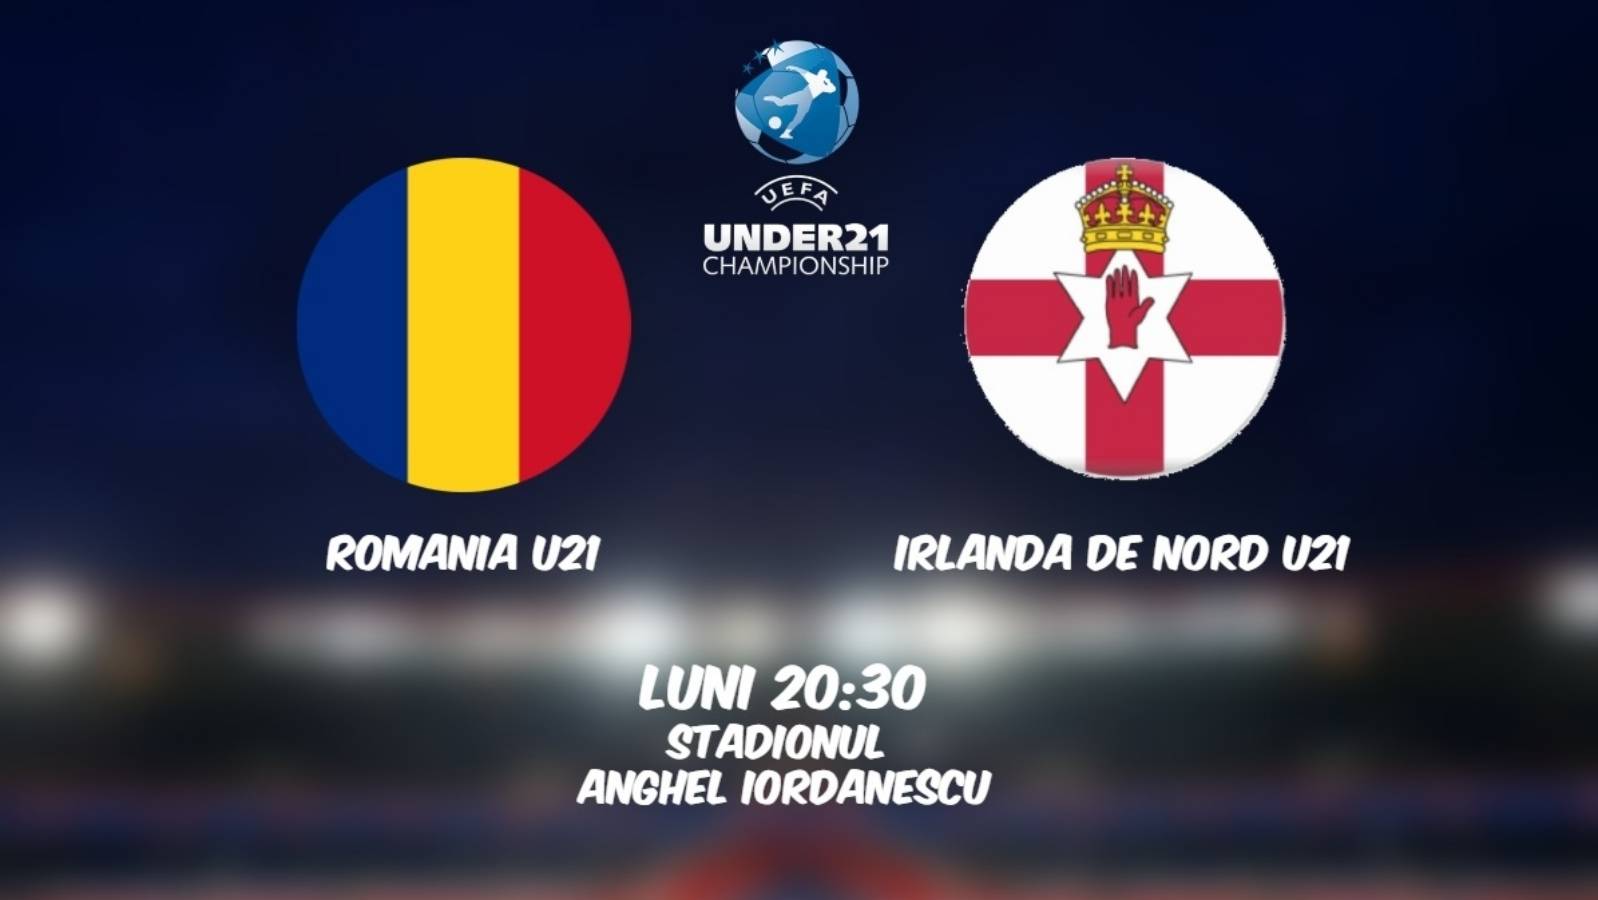 RUMÄNIEN U21 – NORDIRLAND U21 LIVE PRO TV EURO 2021